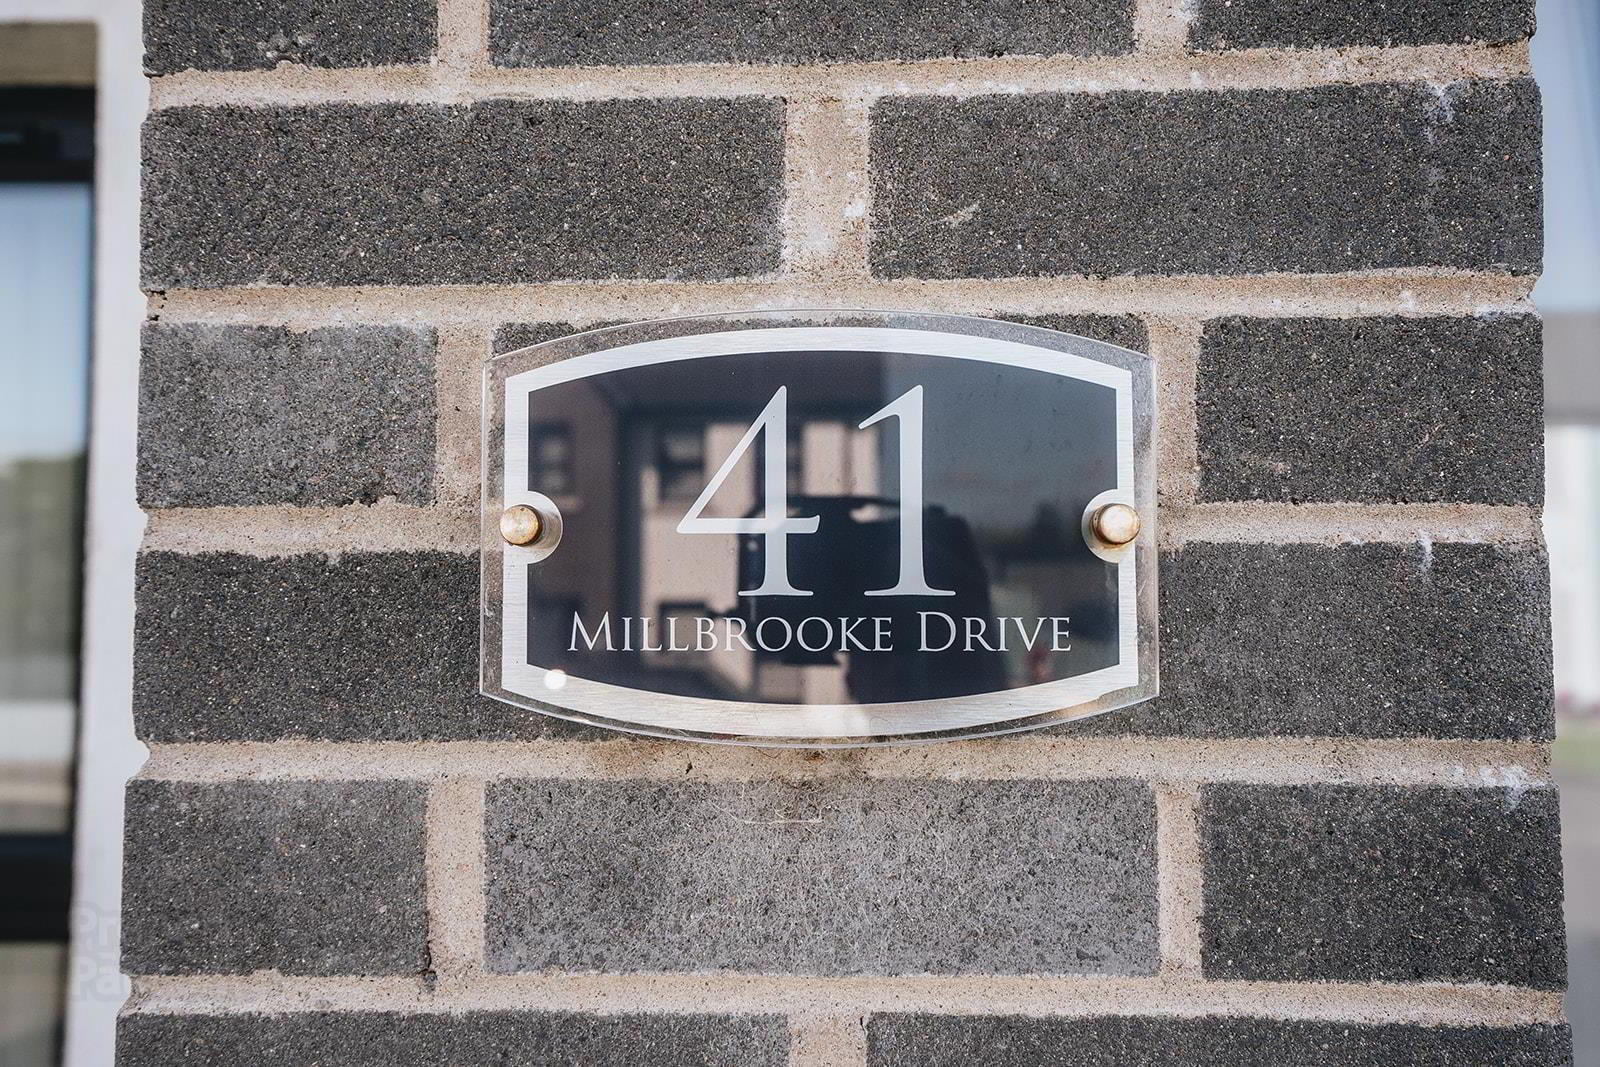 41 Millbrooke Drive